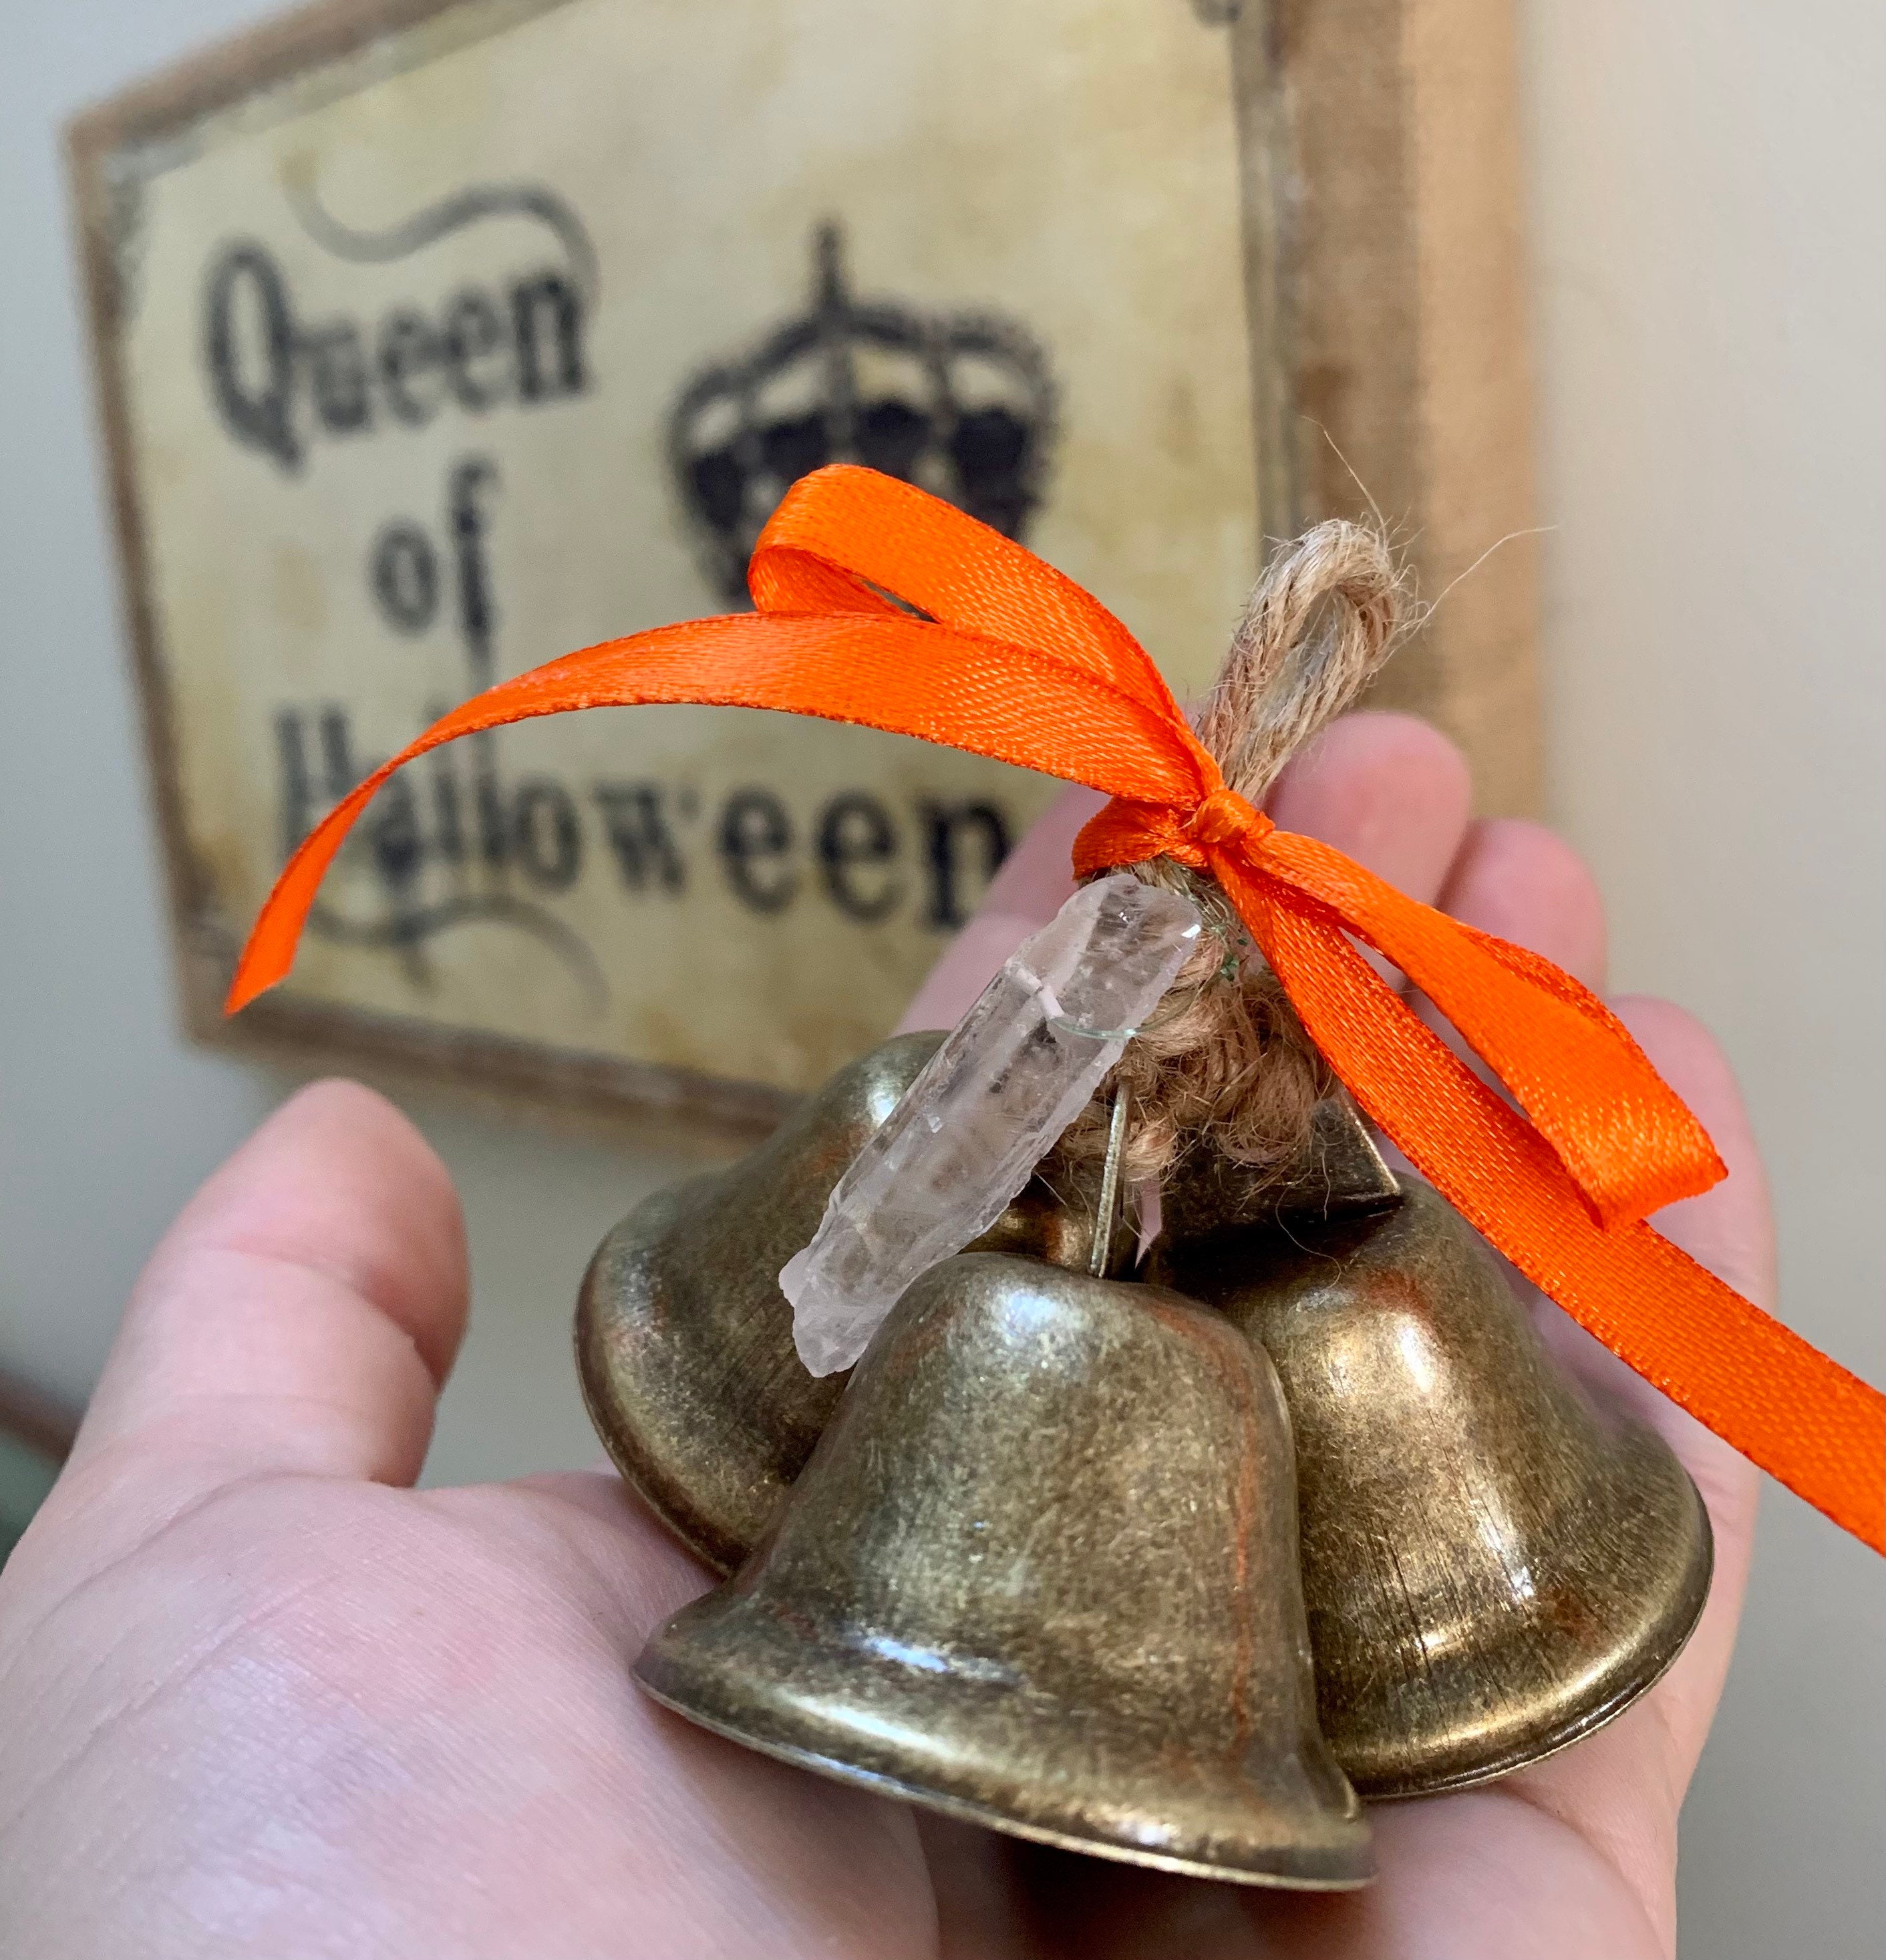 50/100/200/300PCS 8mm Metal Jingle Bells Craft Bells DIY Bells for  Christmas Festival Wedding Home Decoration